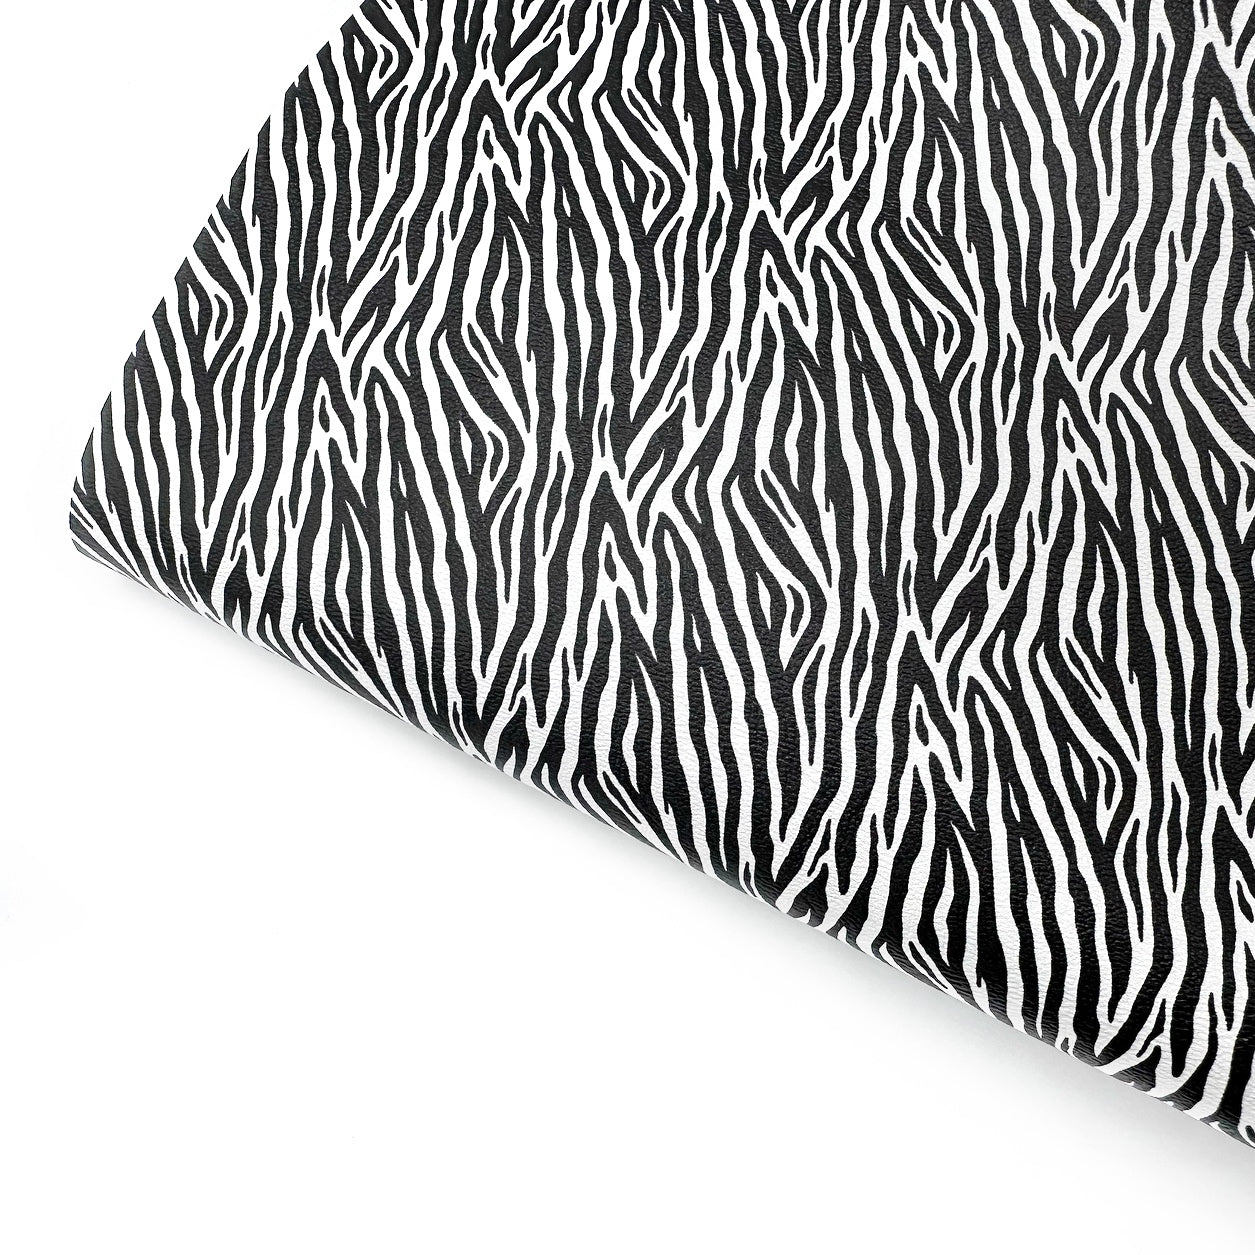 Zebra Print original Premium Faux Leather Fabric Sheets